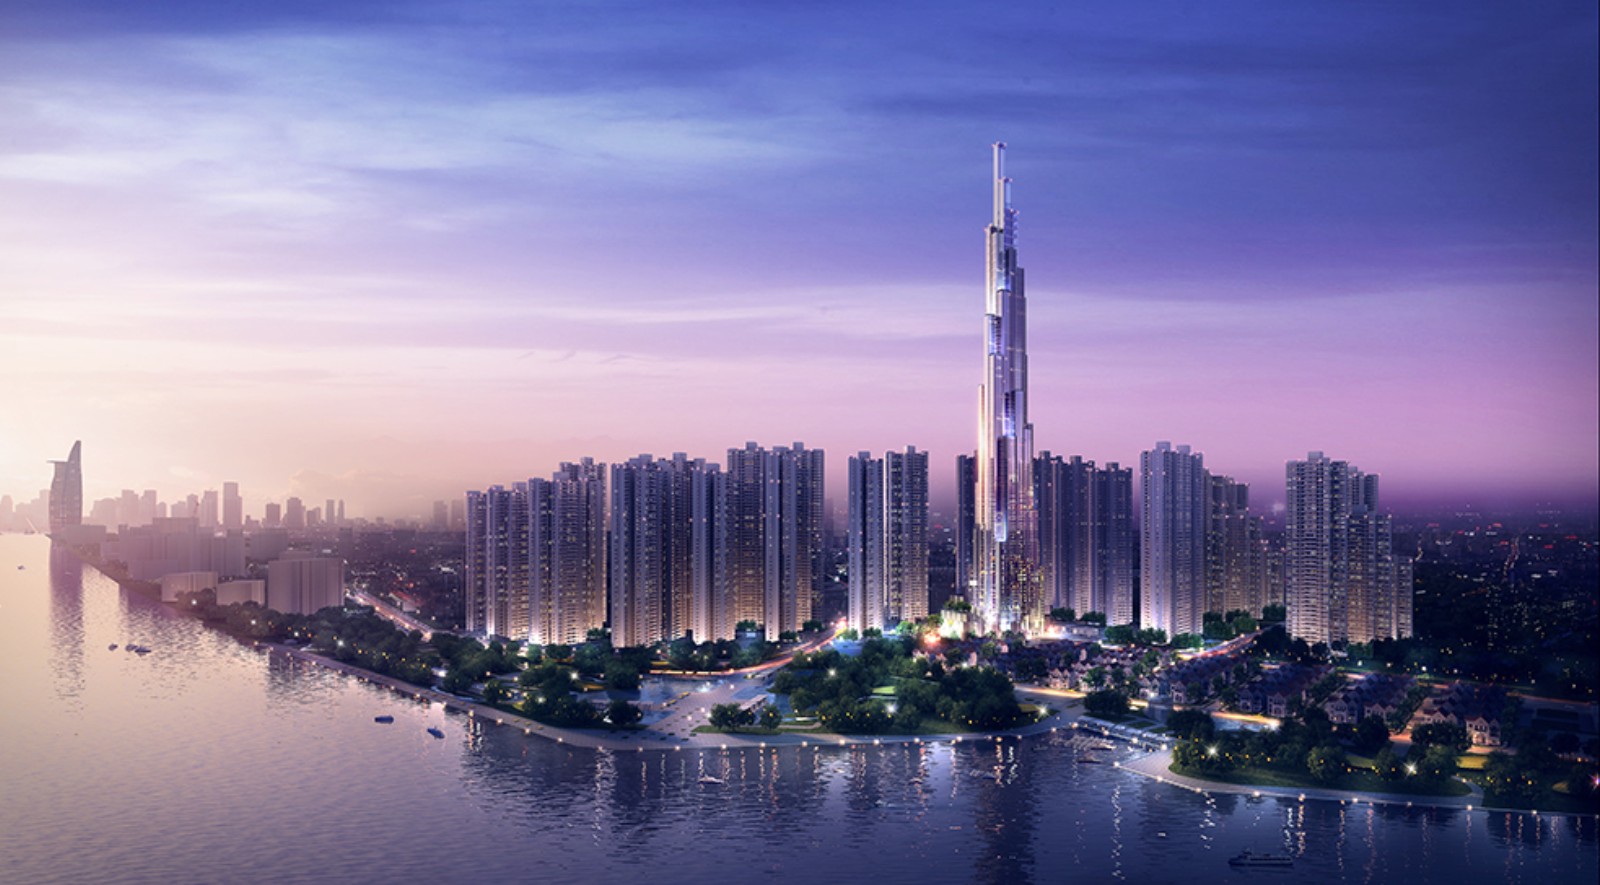 tallest landmark building in Vietnam